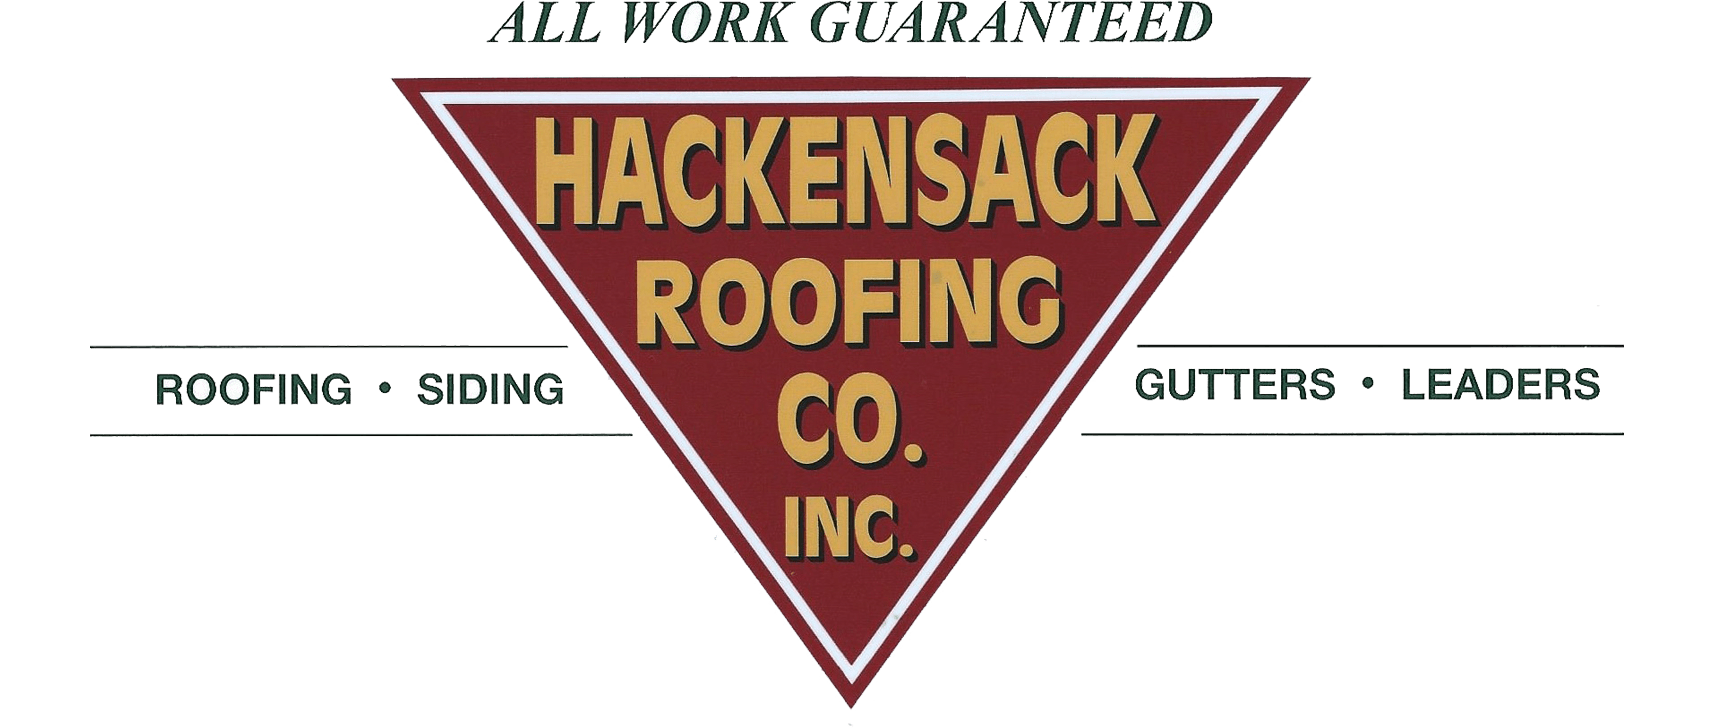 Hackensack Roofing